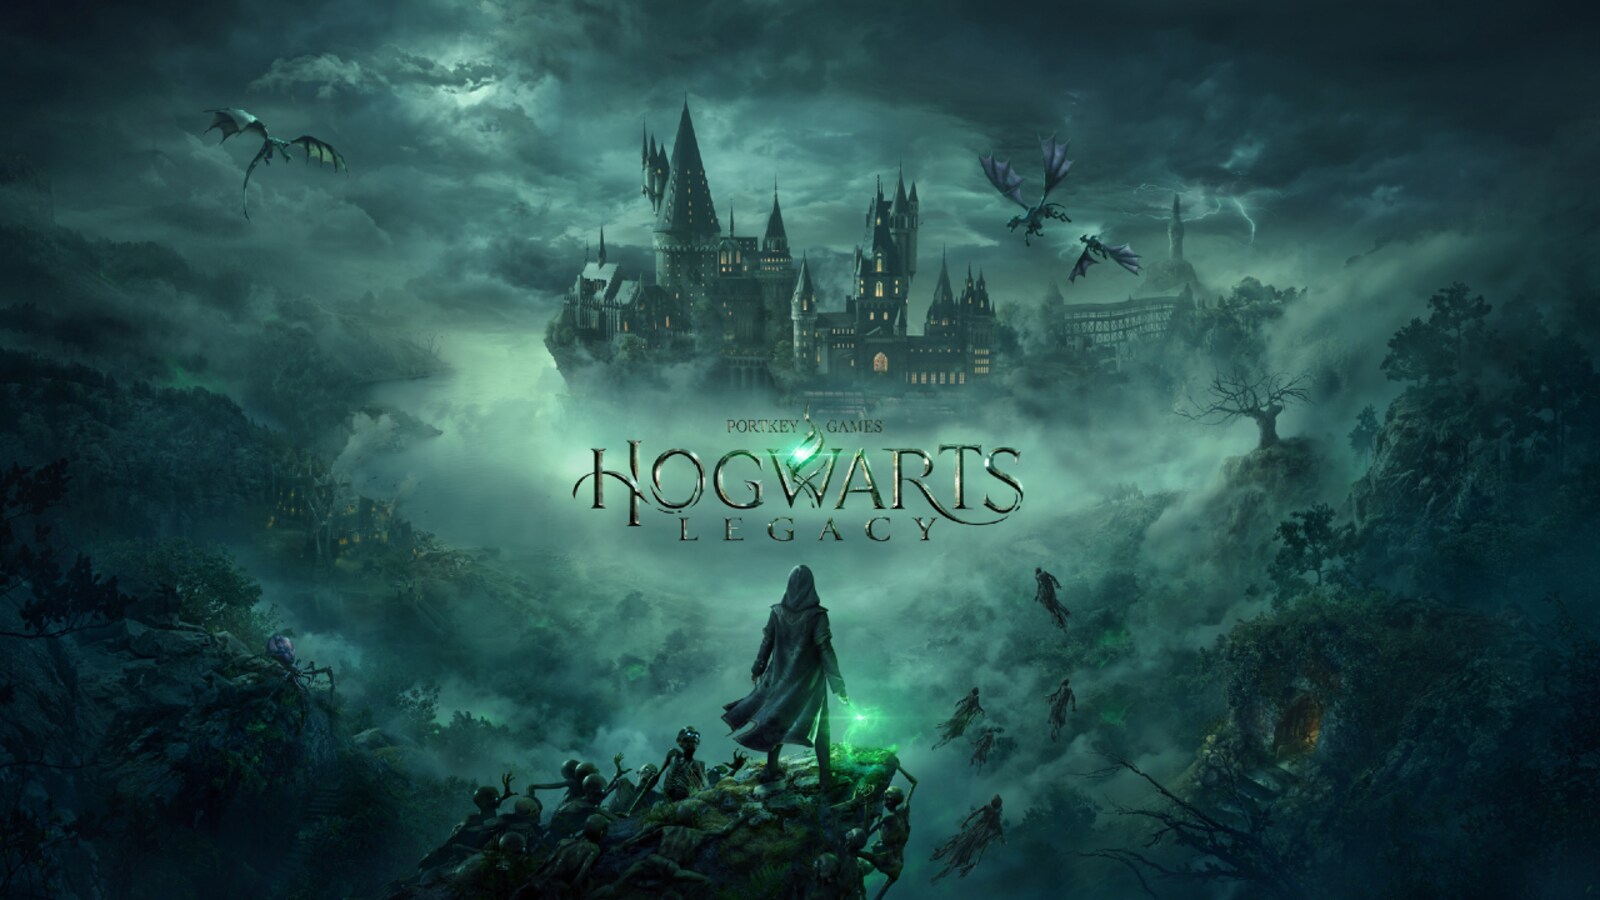 Hogwarts Legacy Sales: $850 Million, 12 Million Units in First 2 Weeks